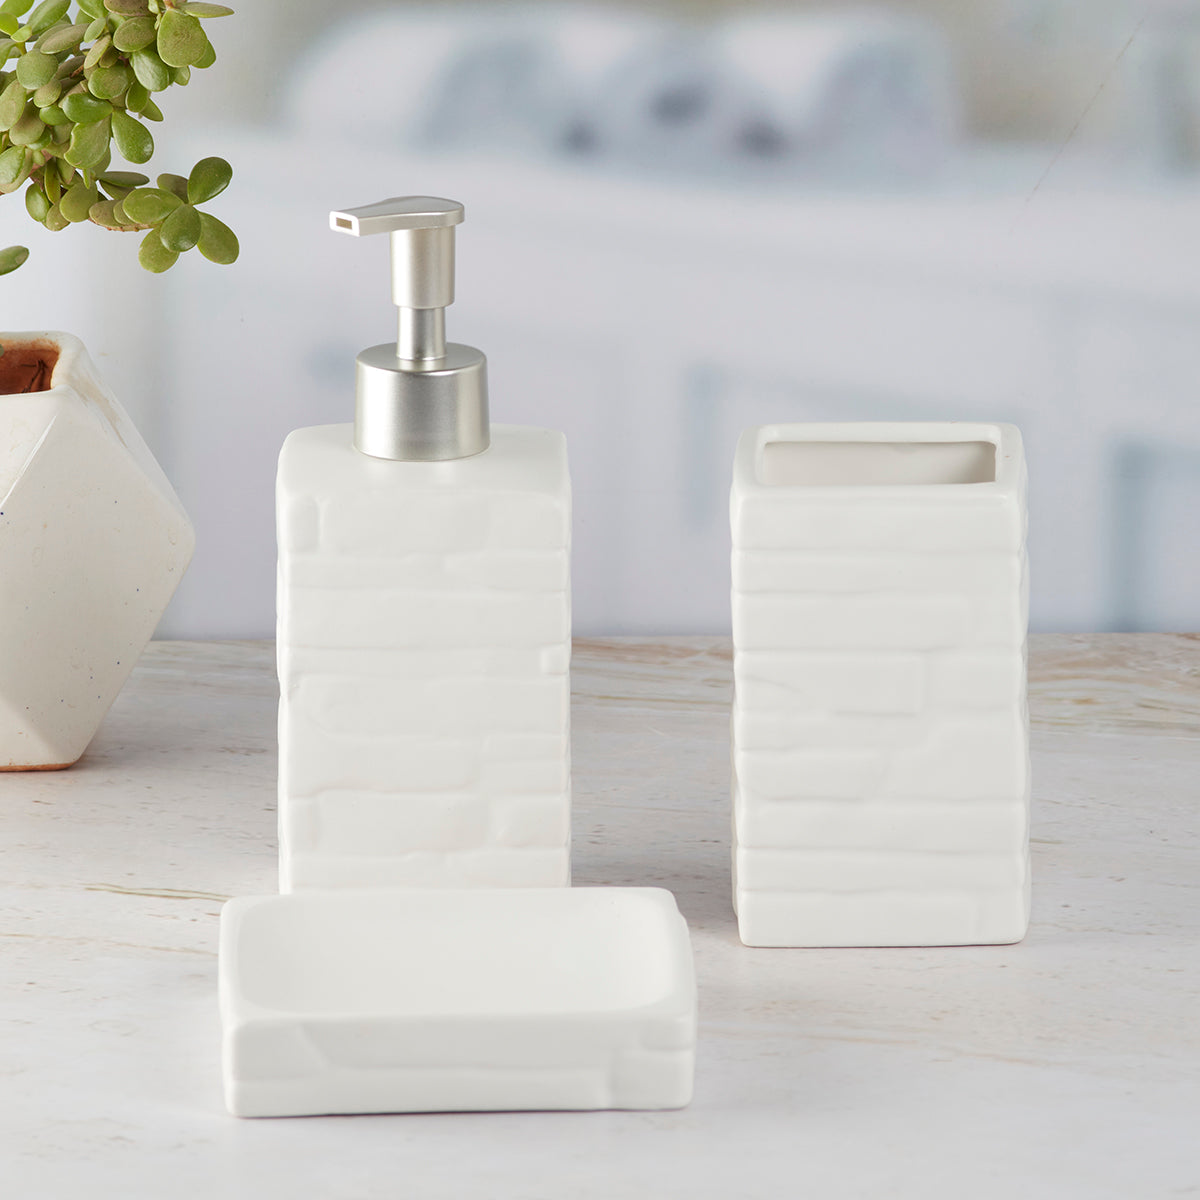 Ceramic Bathroom Accessories Set of 3 Bath Set with Soap Dispenser (9882)